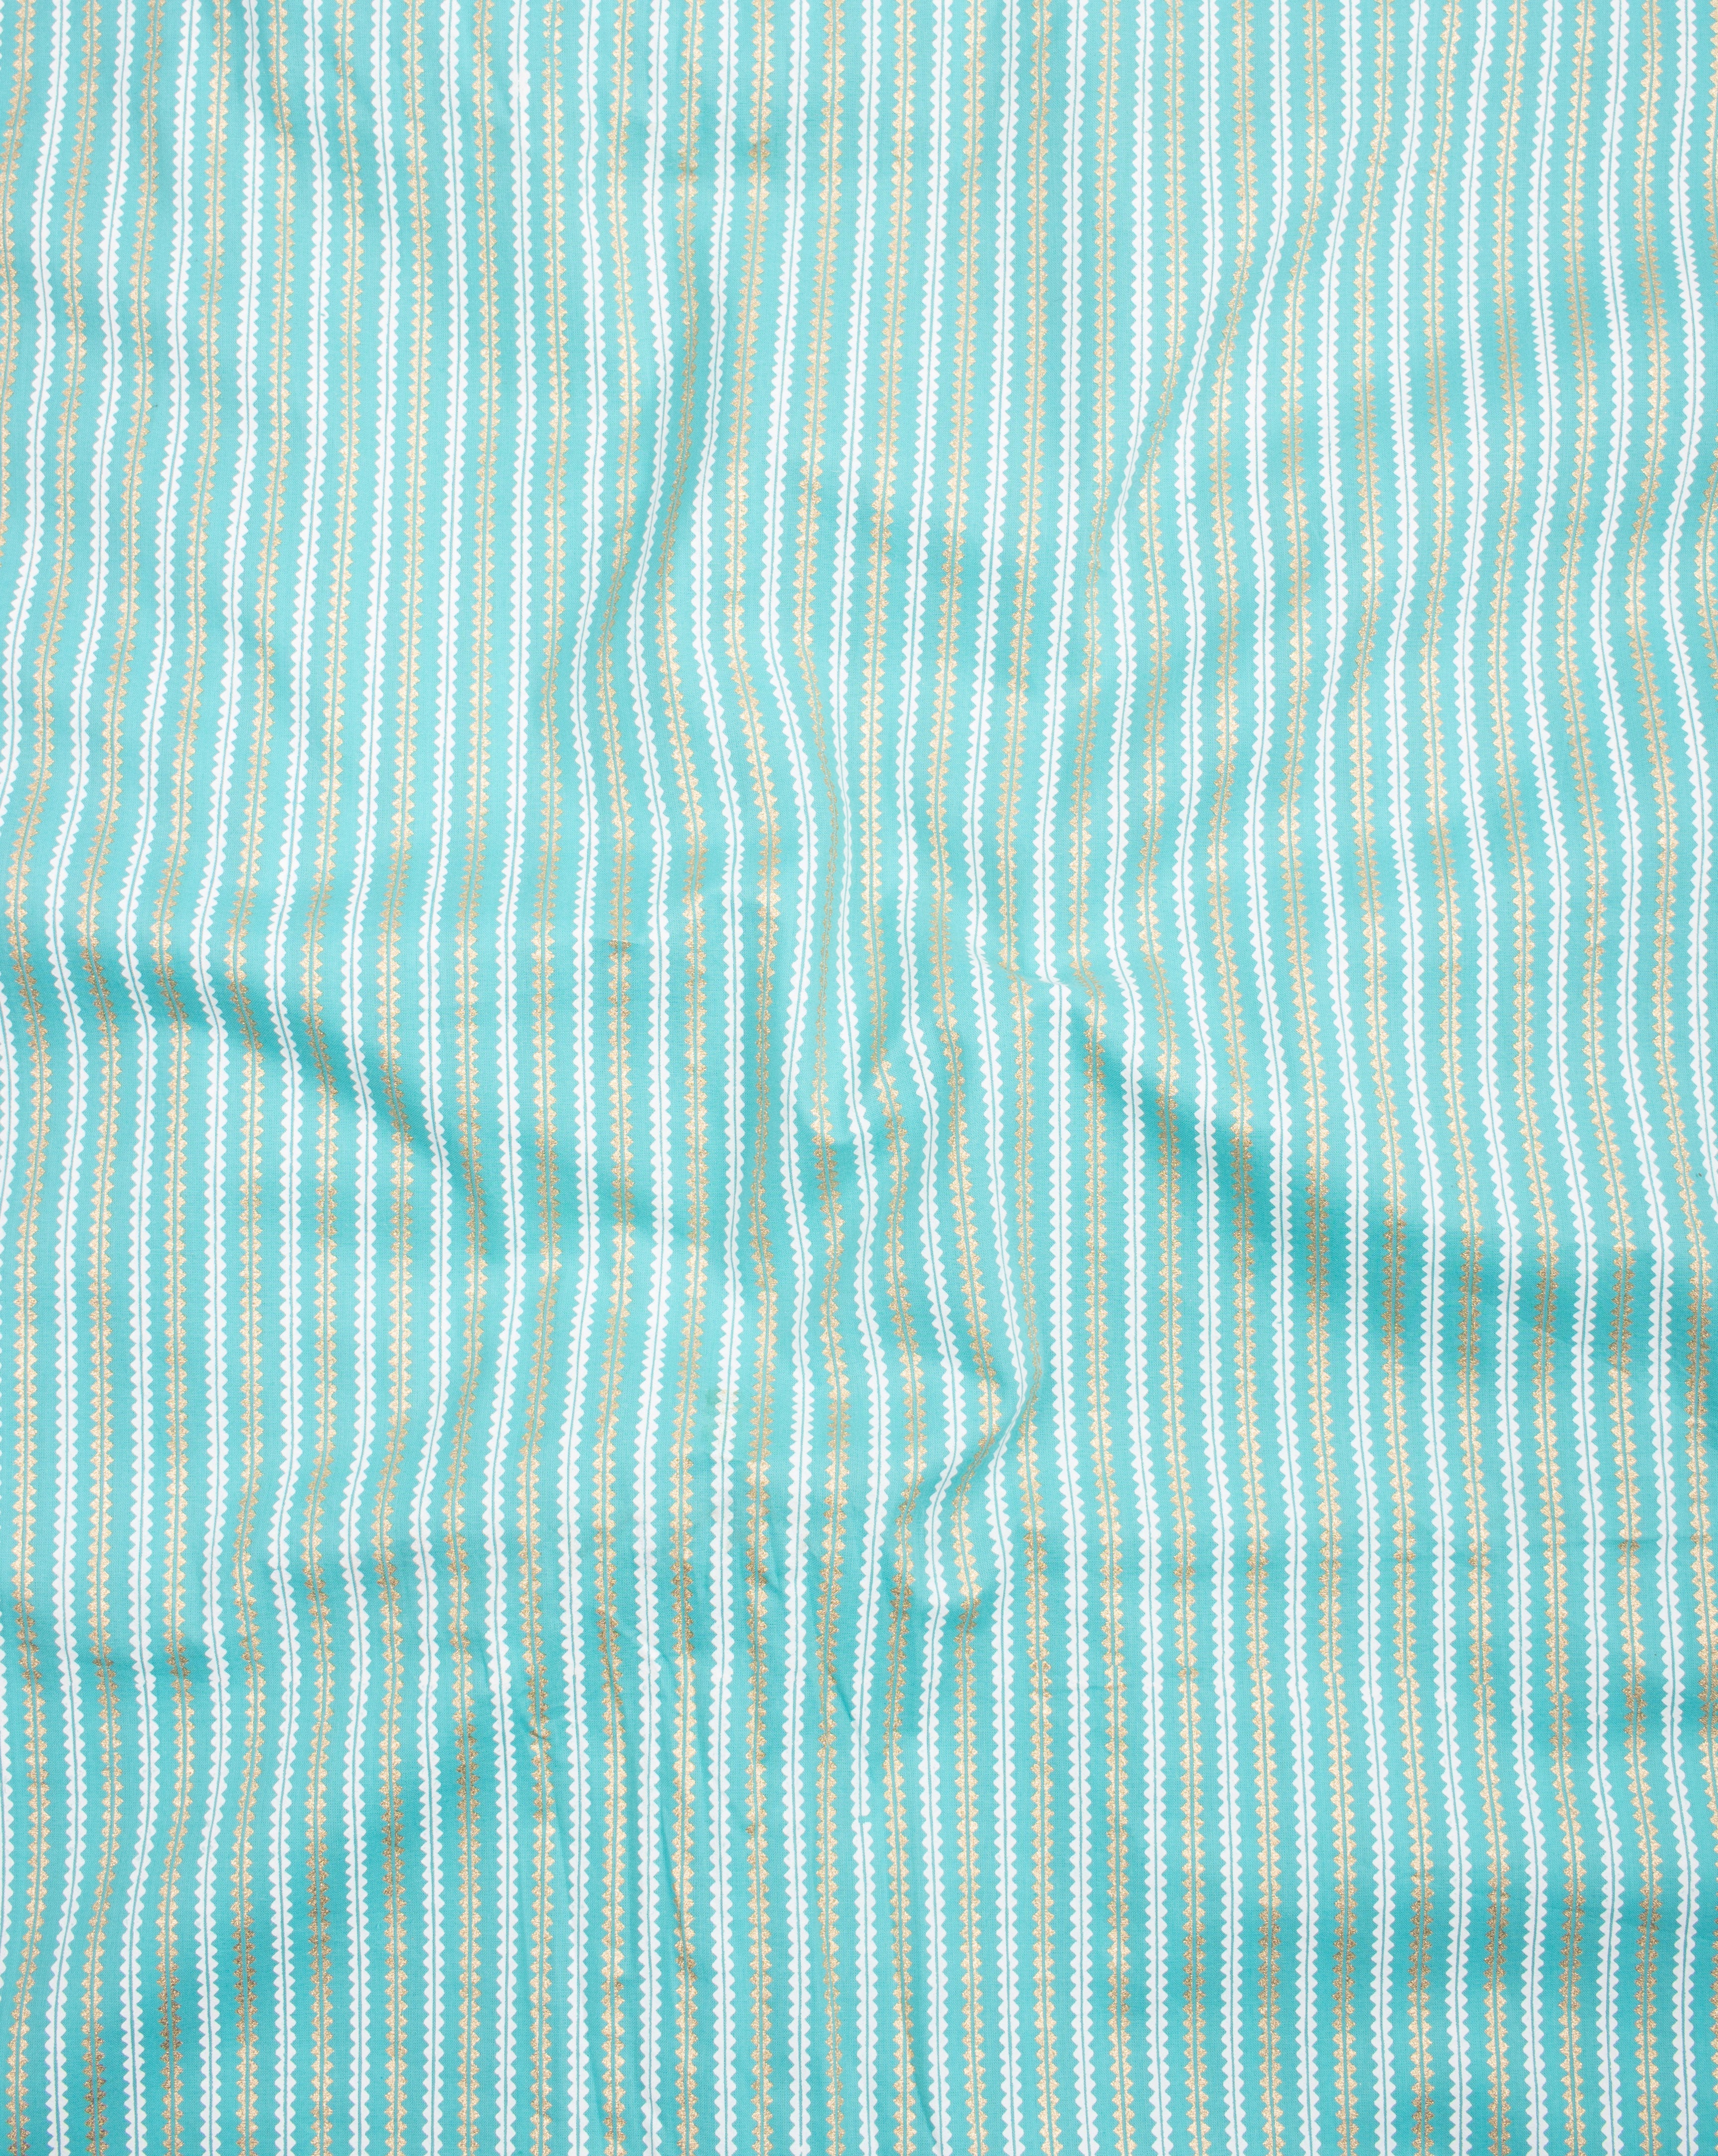 Turquoise Gold Stripes Foil Screen Print Cotton Fabric - Fabriclore.com